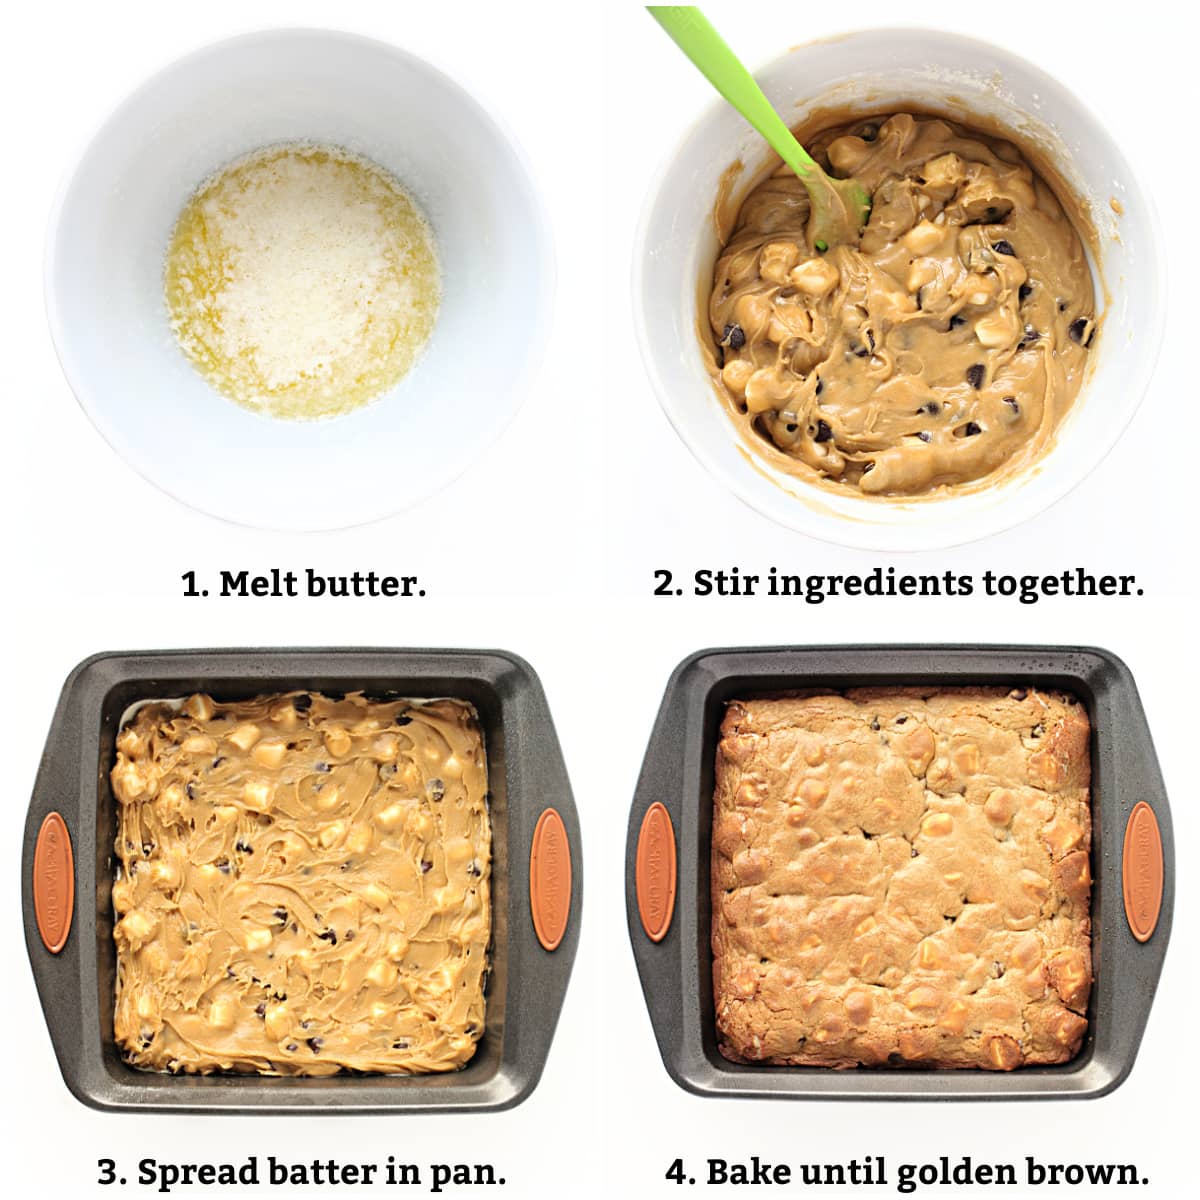 Instructions: melt butter, combine ingredients, spread batter in pan, bake.